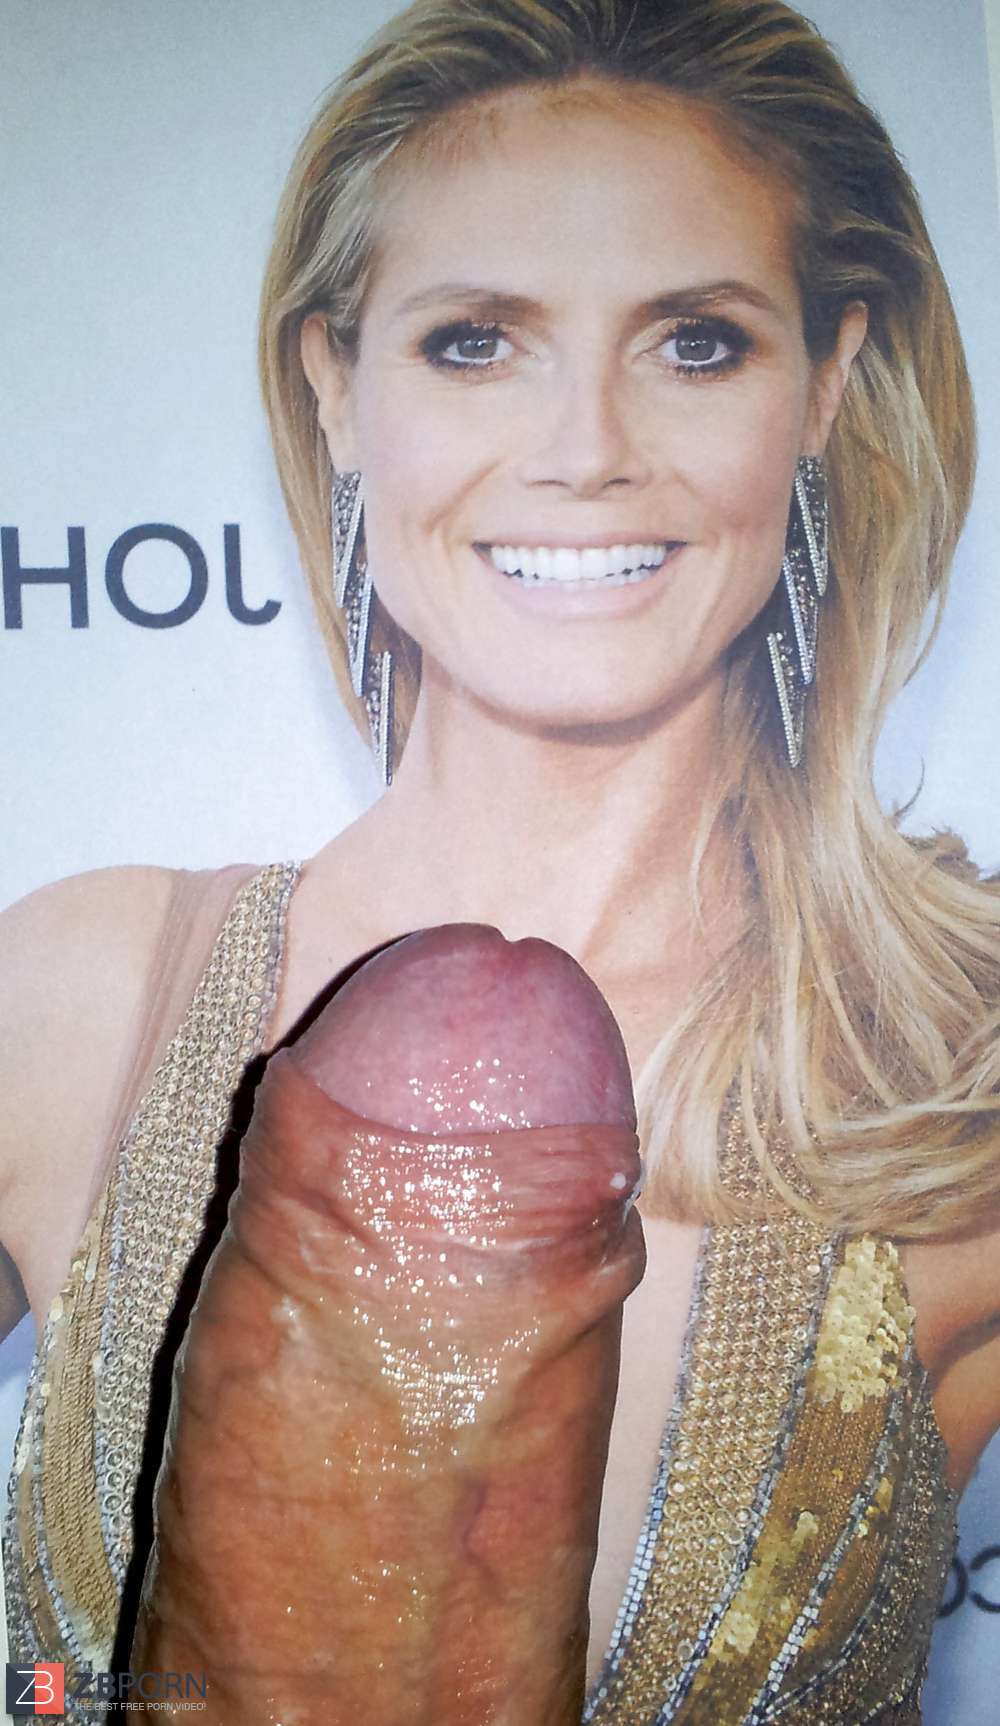 Tibute For Heidi Klum Zb Porn. 